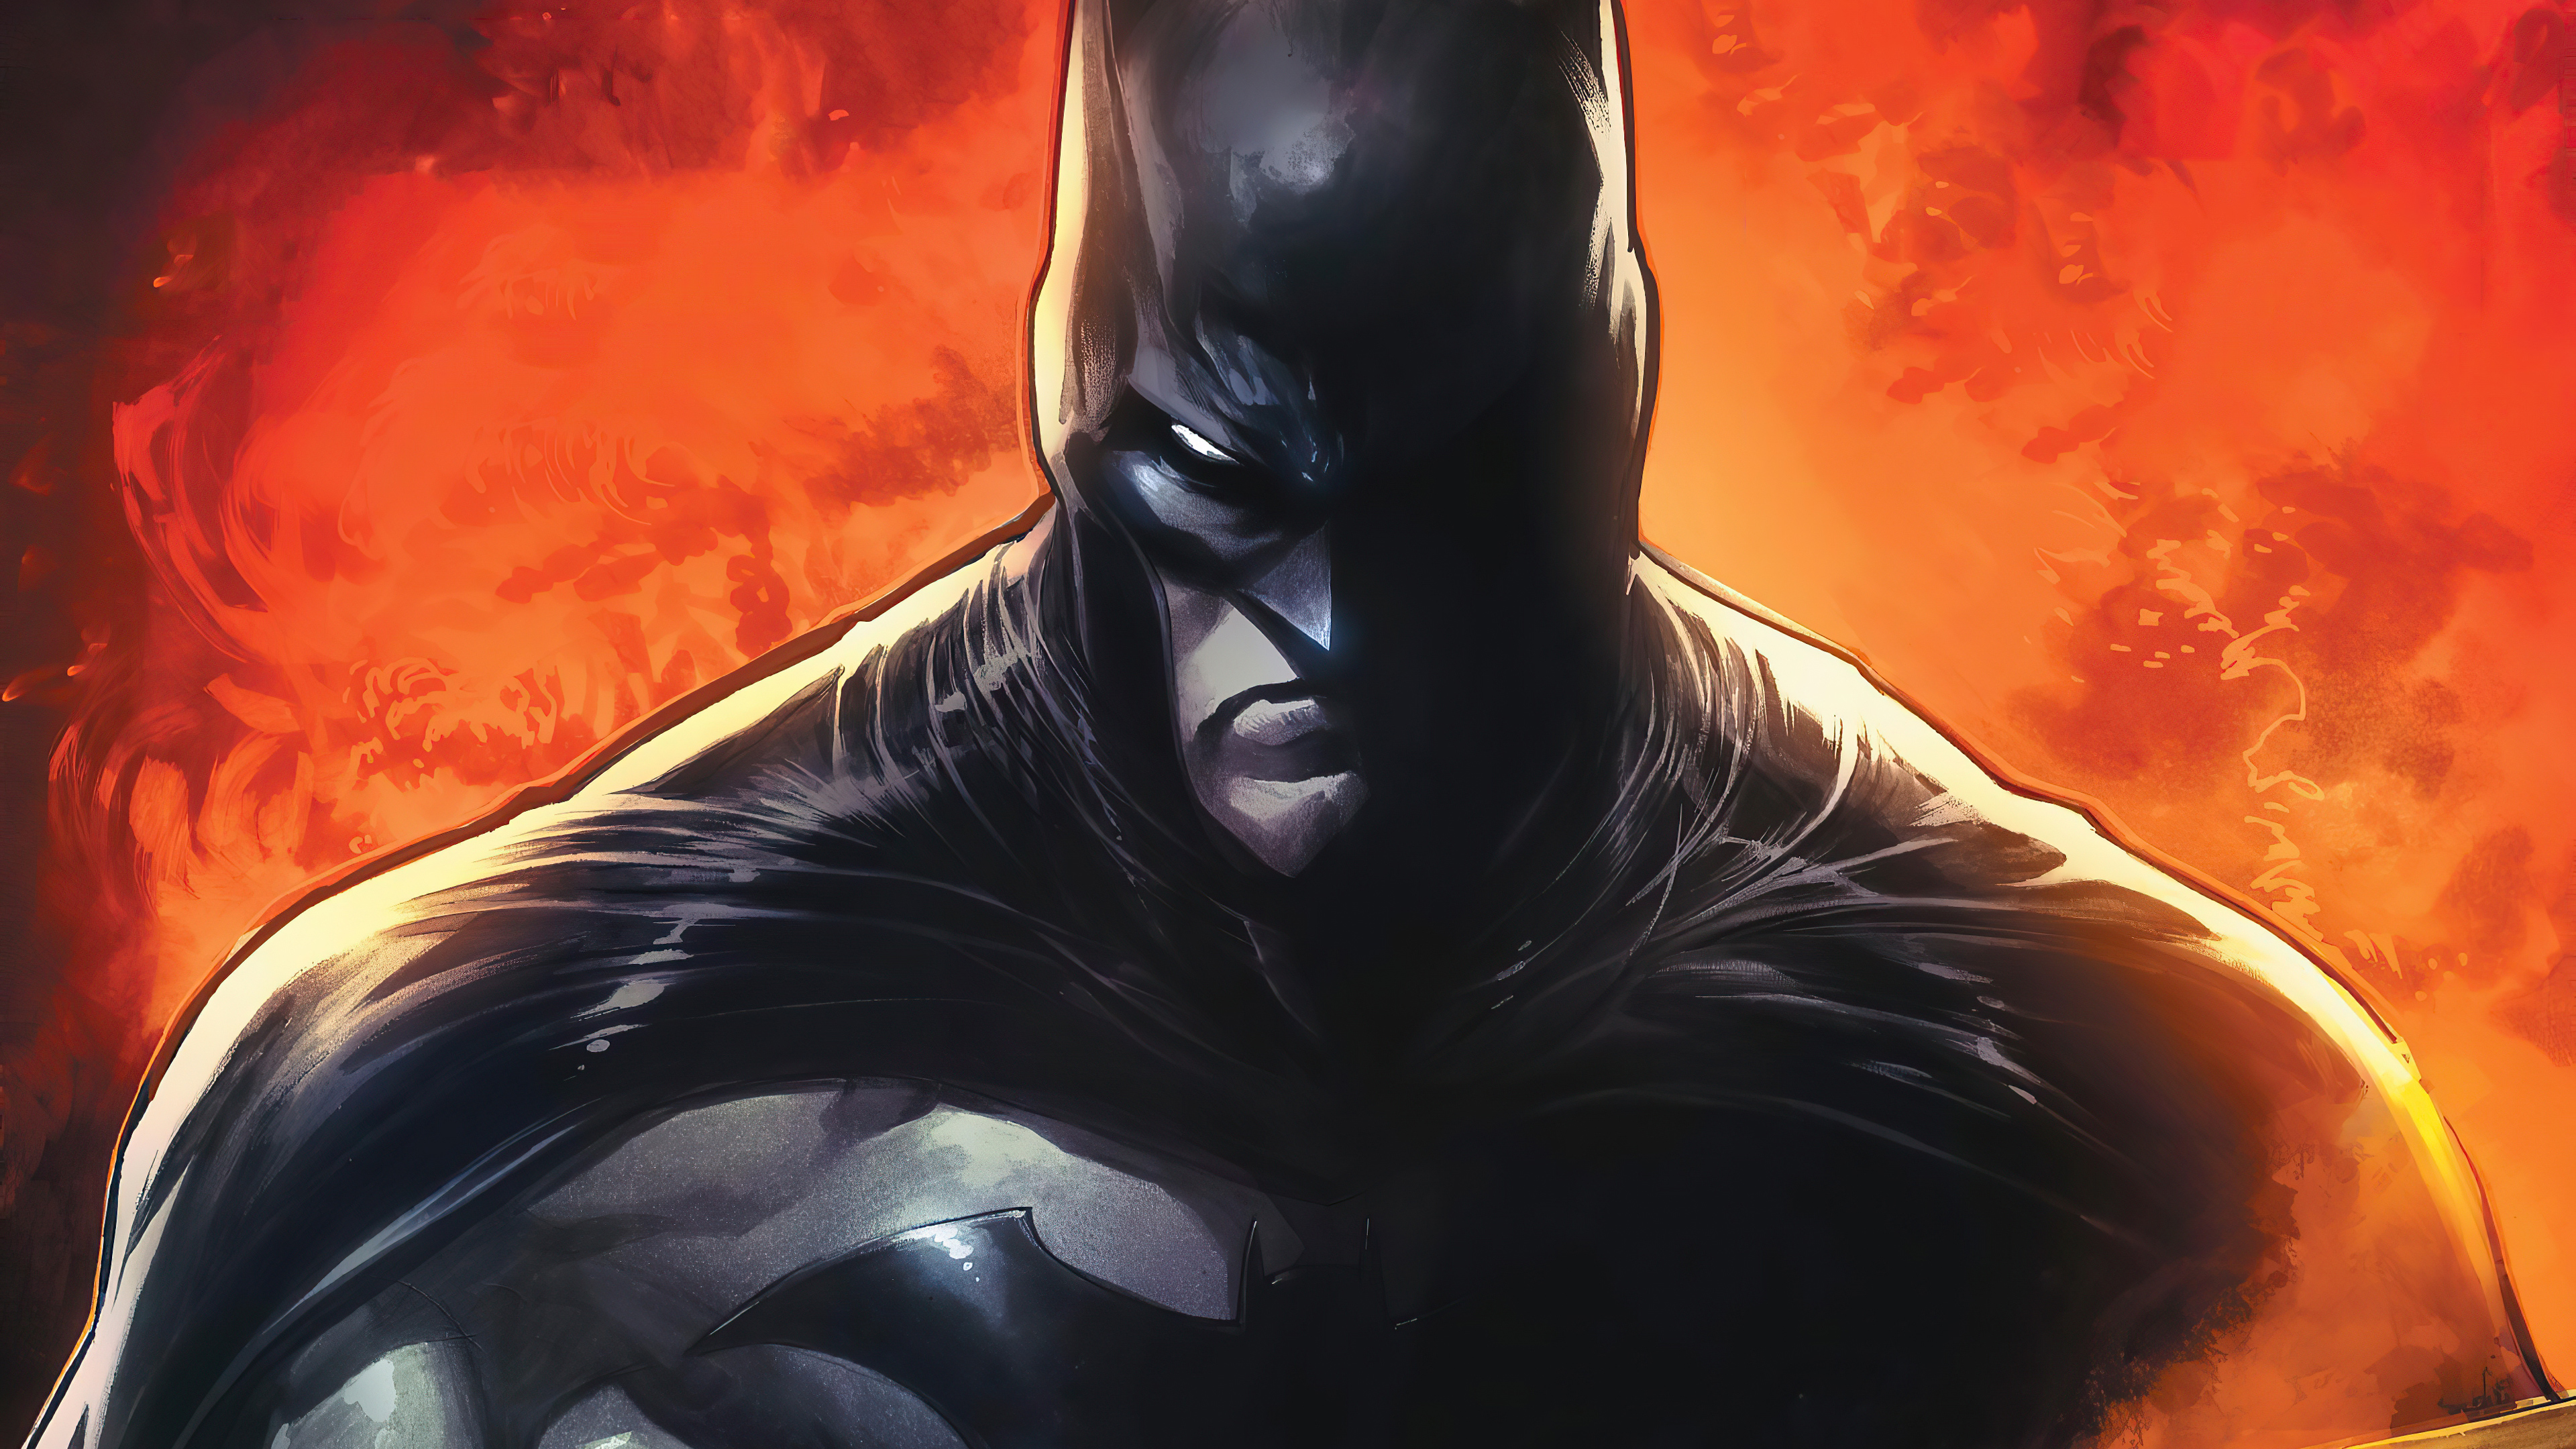 Batman 4k Ultra HD Wallpaper | Background Image | 3840x2160